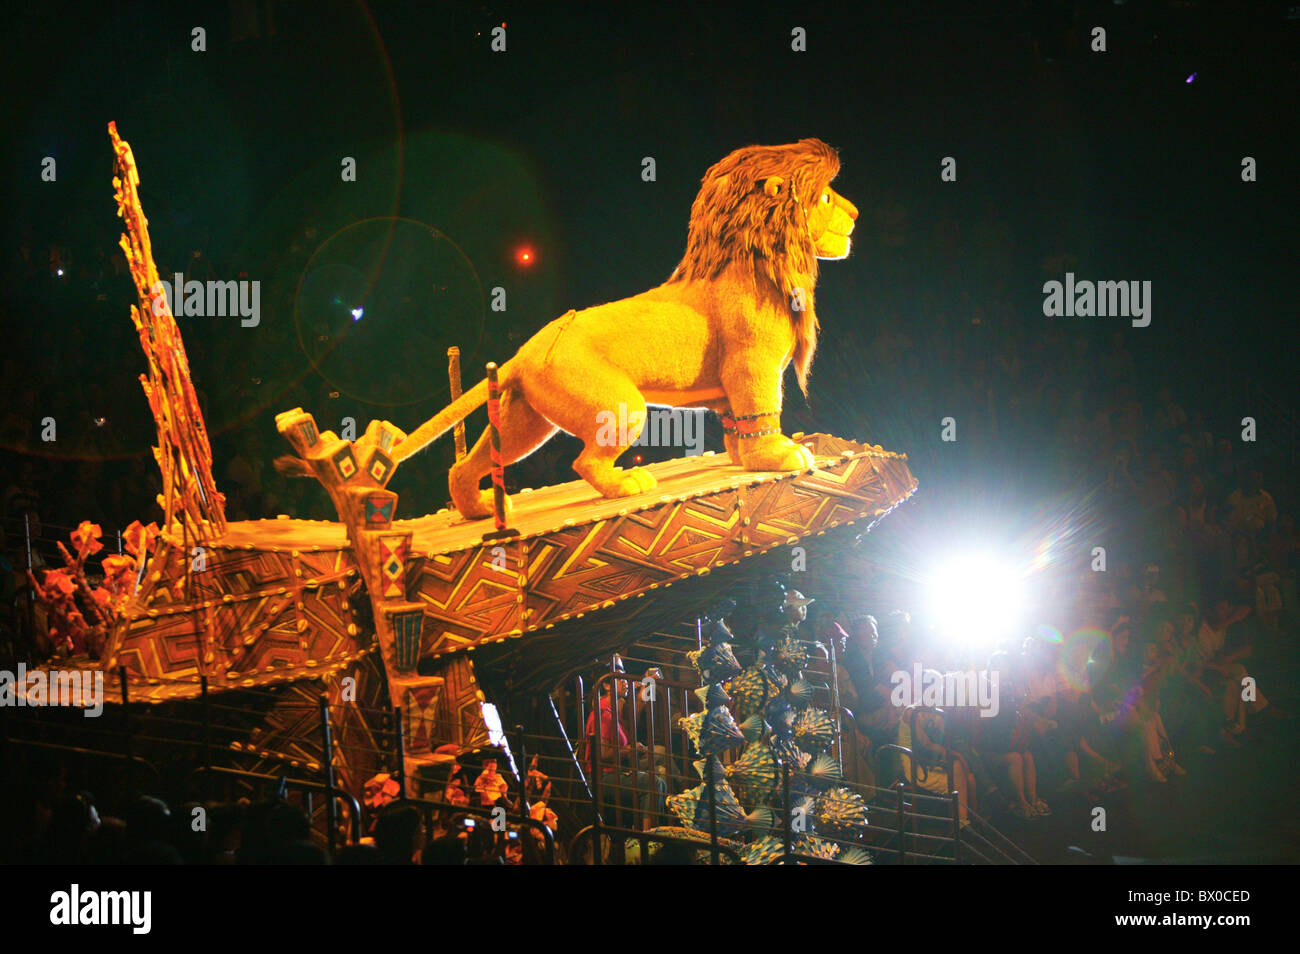 Musical König der Löwen aufgeführt im Golden Mickeys, Fantasyland, Hong Kong Disneyland, Lantau Island, Hong Kong, China Stockfoto